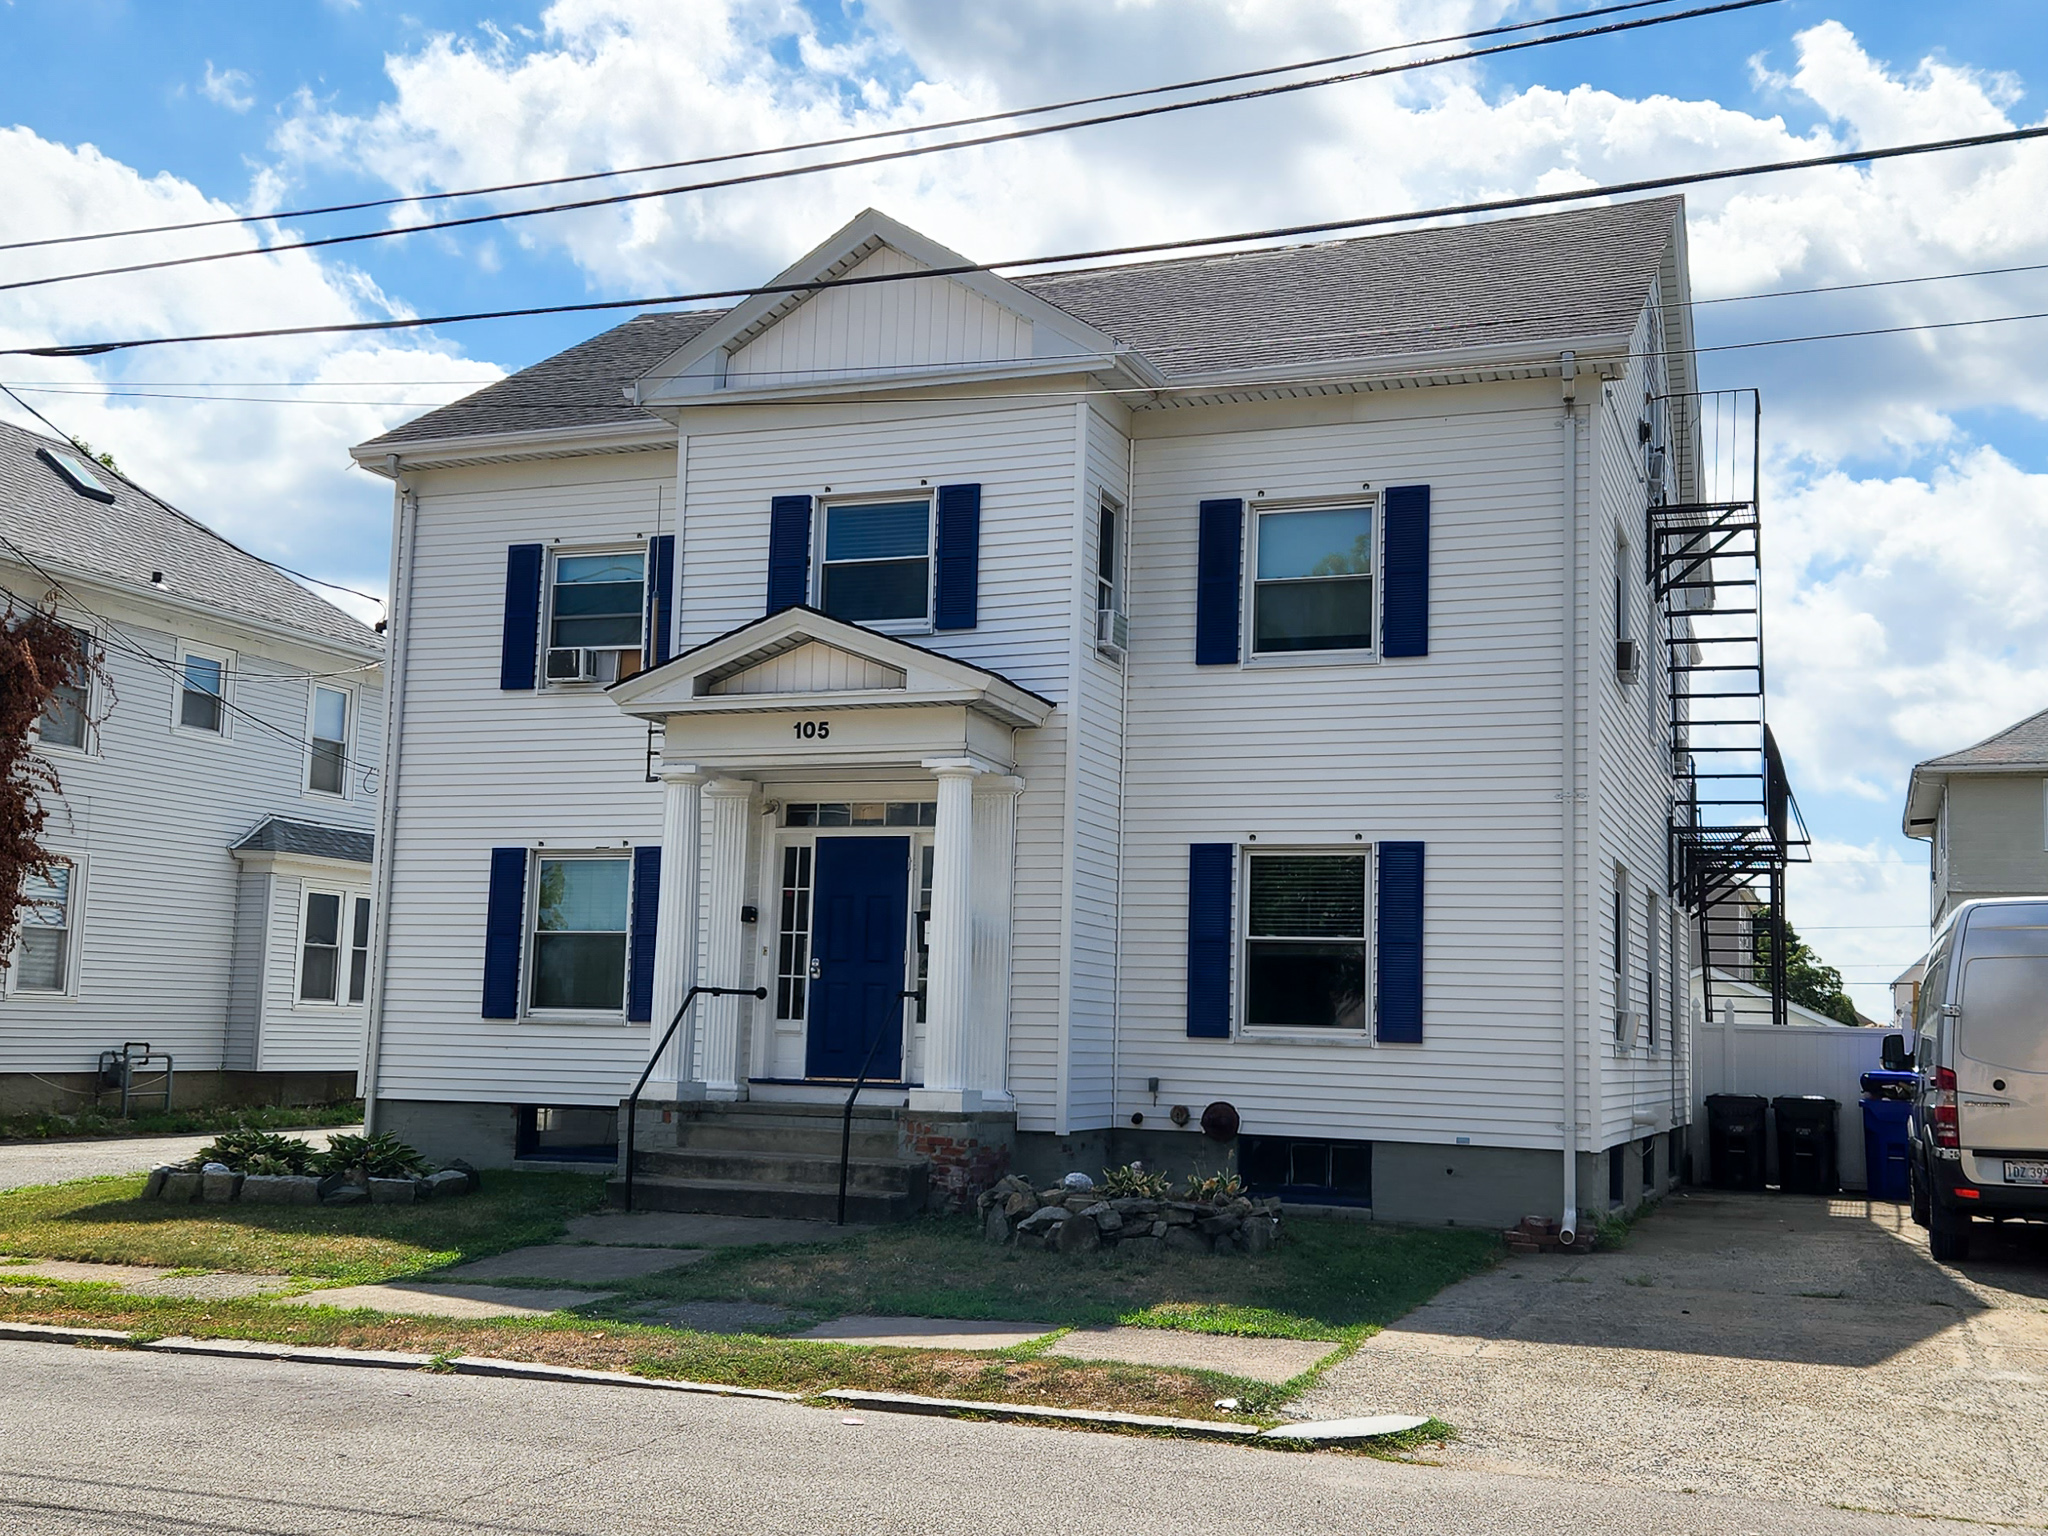 Kayaly Sober House │ Sober Living for Men in Pawtucket, Rhode Island